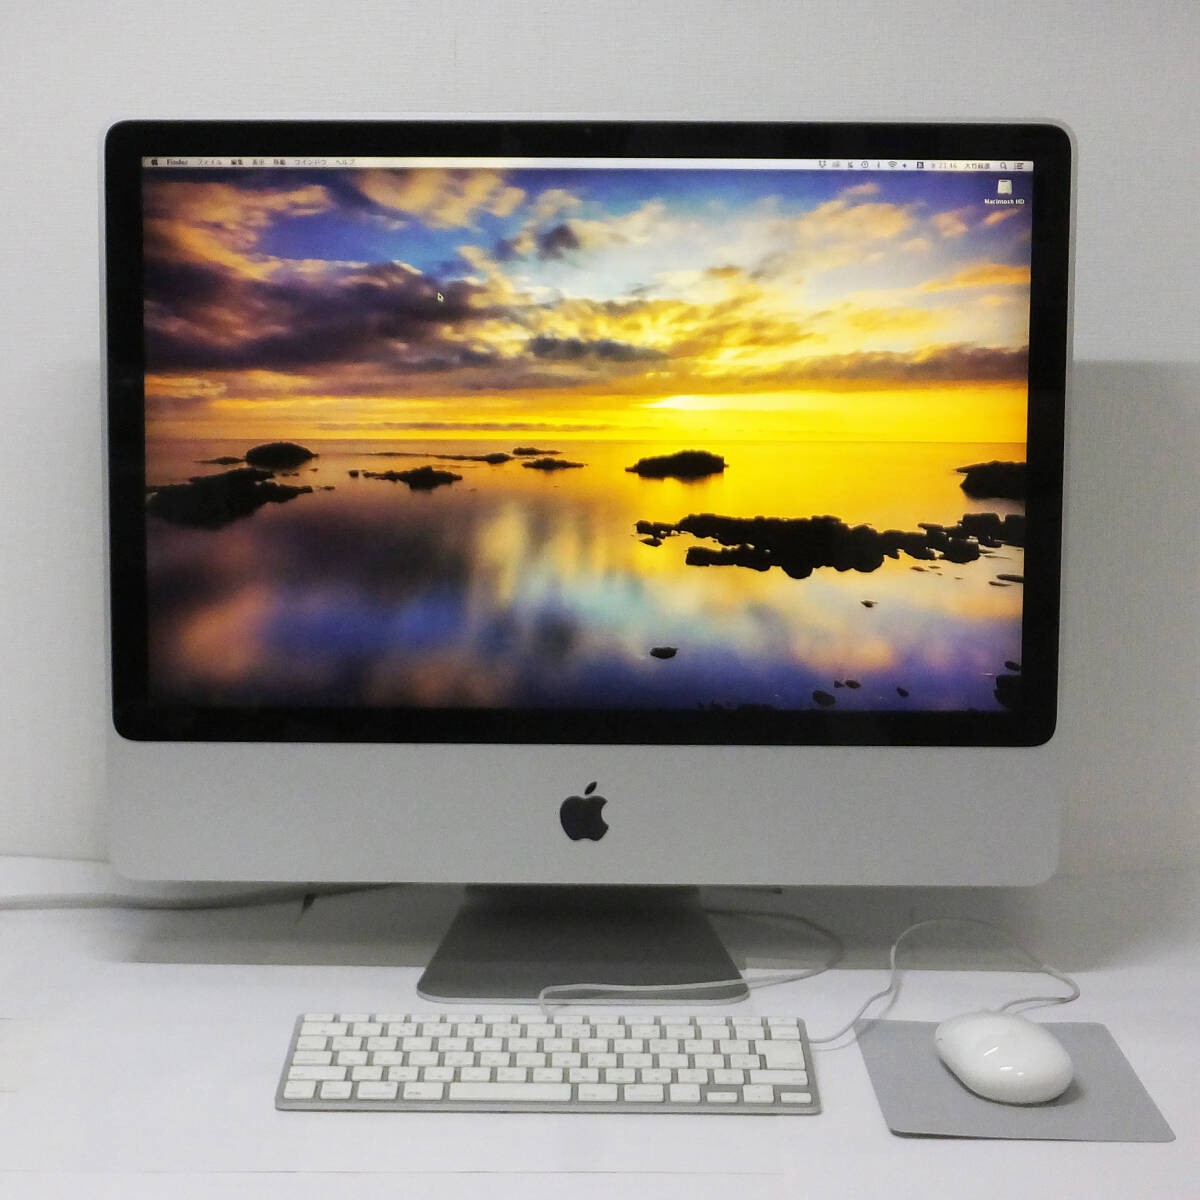 Apple iMac MB418J/A 24inch〈2009〉 HDD640GB 4G リストア、付属のインストーラディスク付き〈スーパードライブ読込不可ジャンク〉の画像1